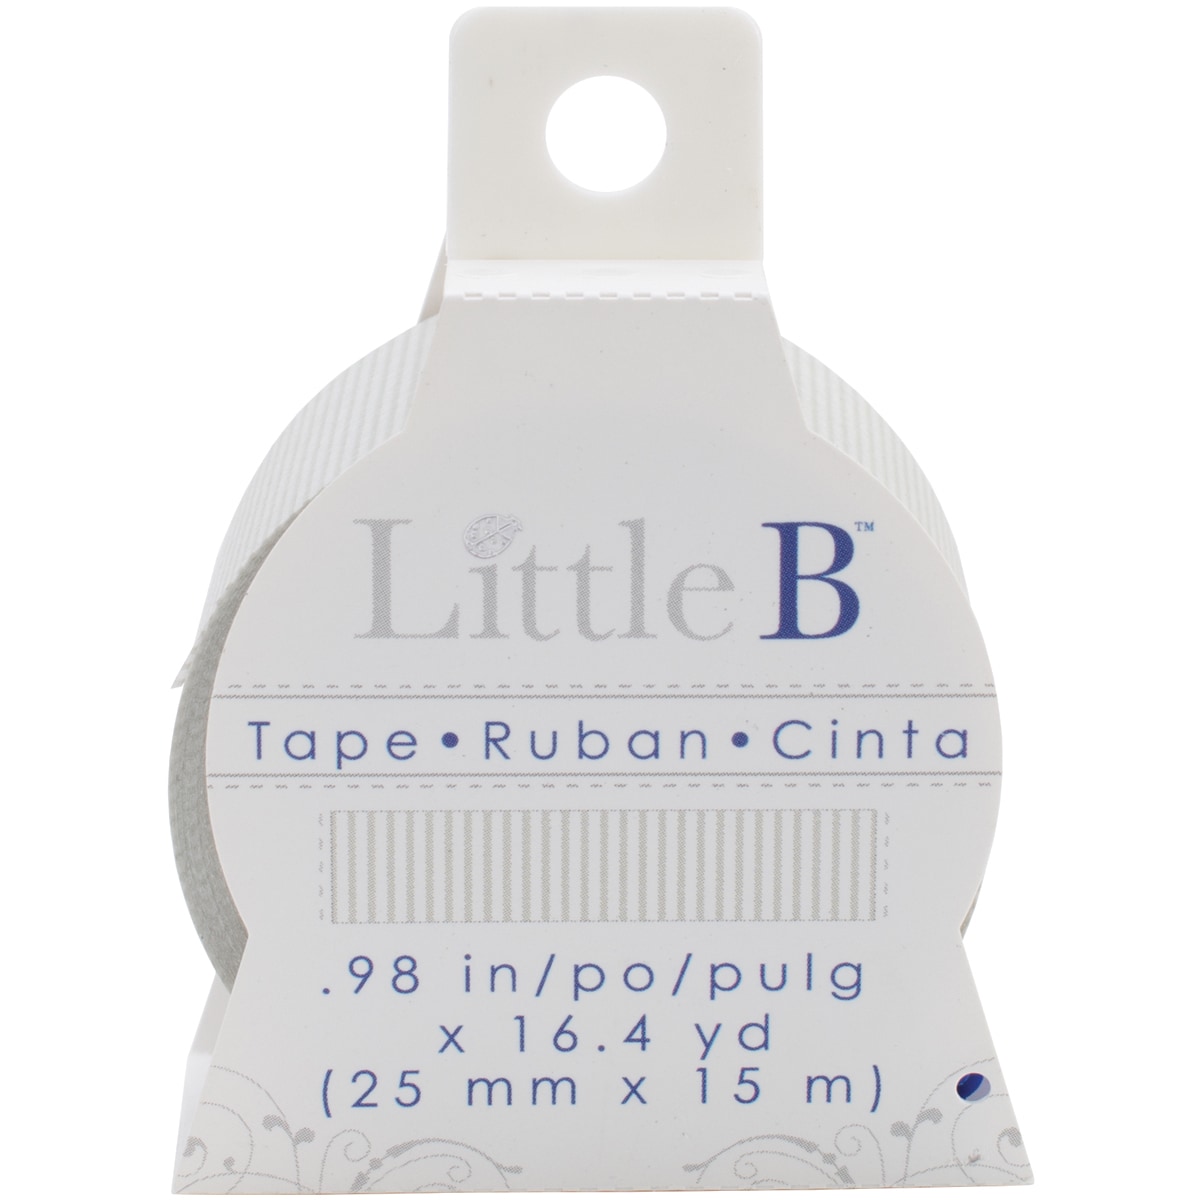 Little B Decorative Paper Tape 25mmx15m white Grosgrain